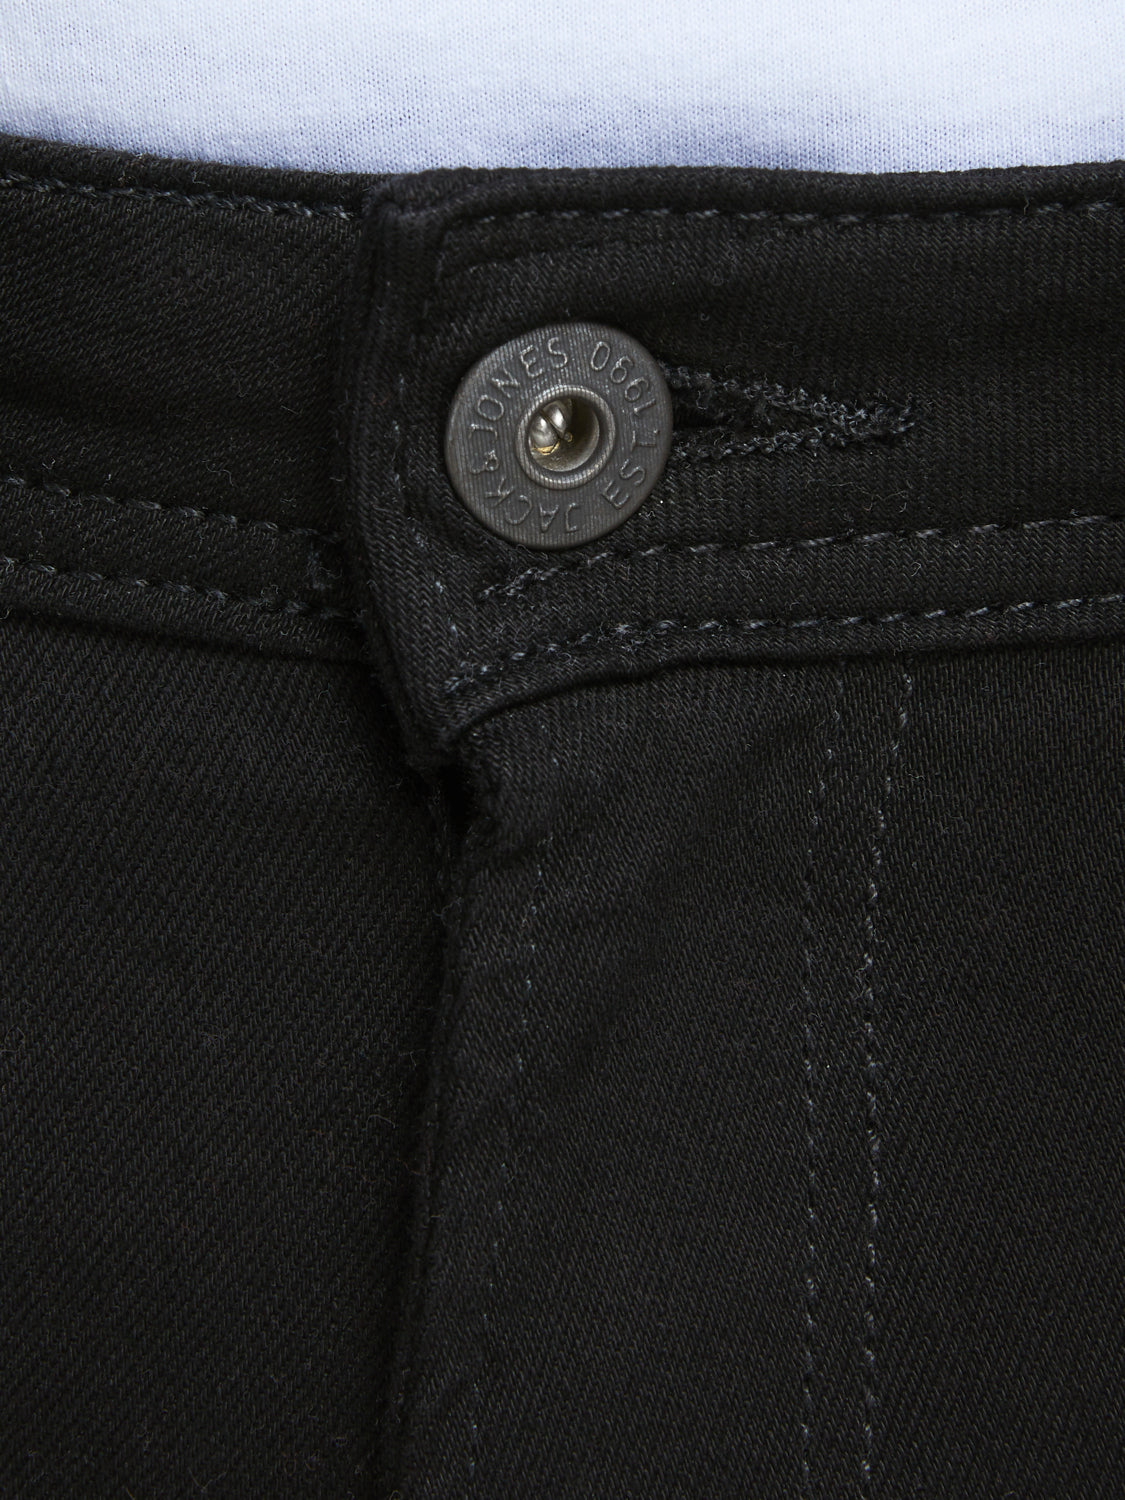 JJILIAM Jeans - black denim